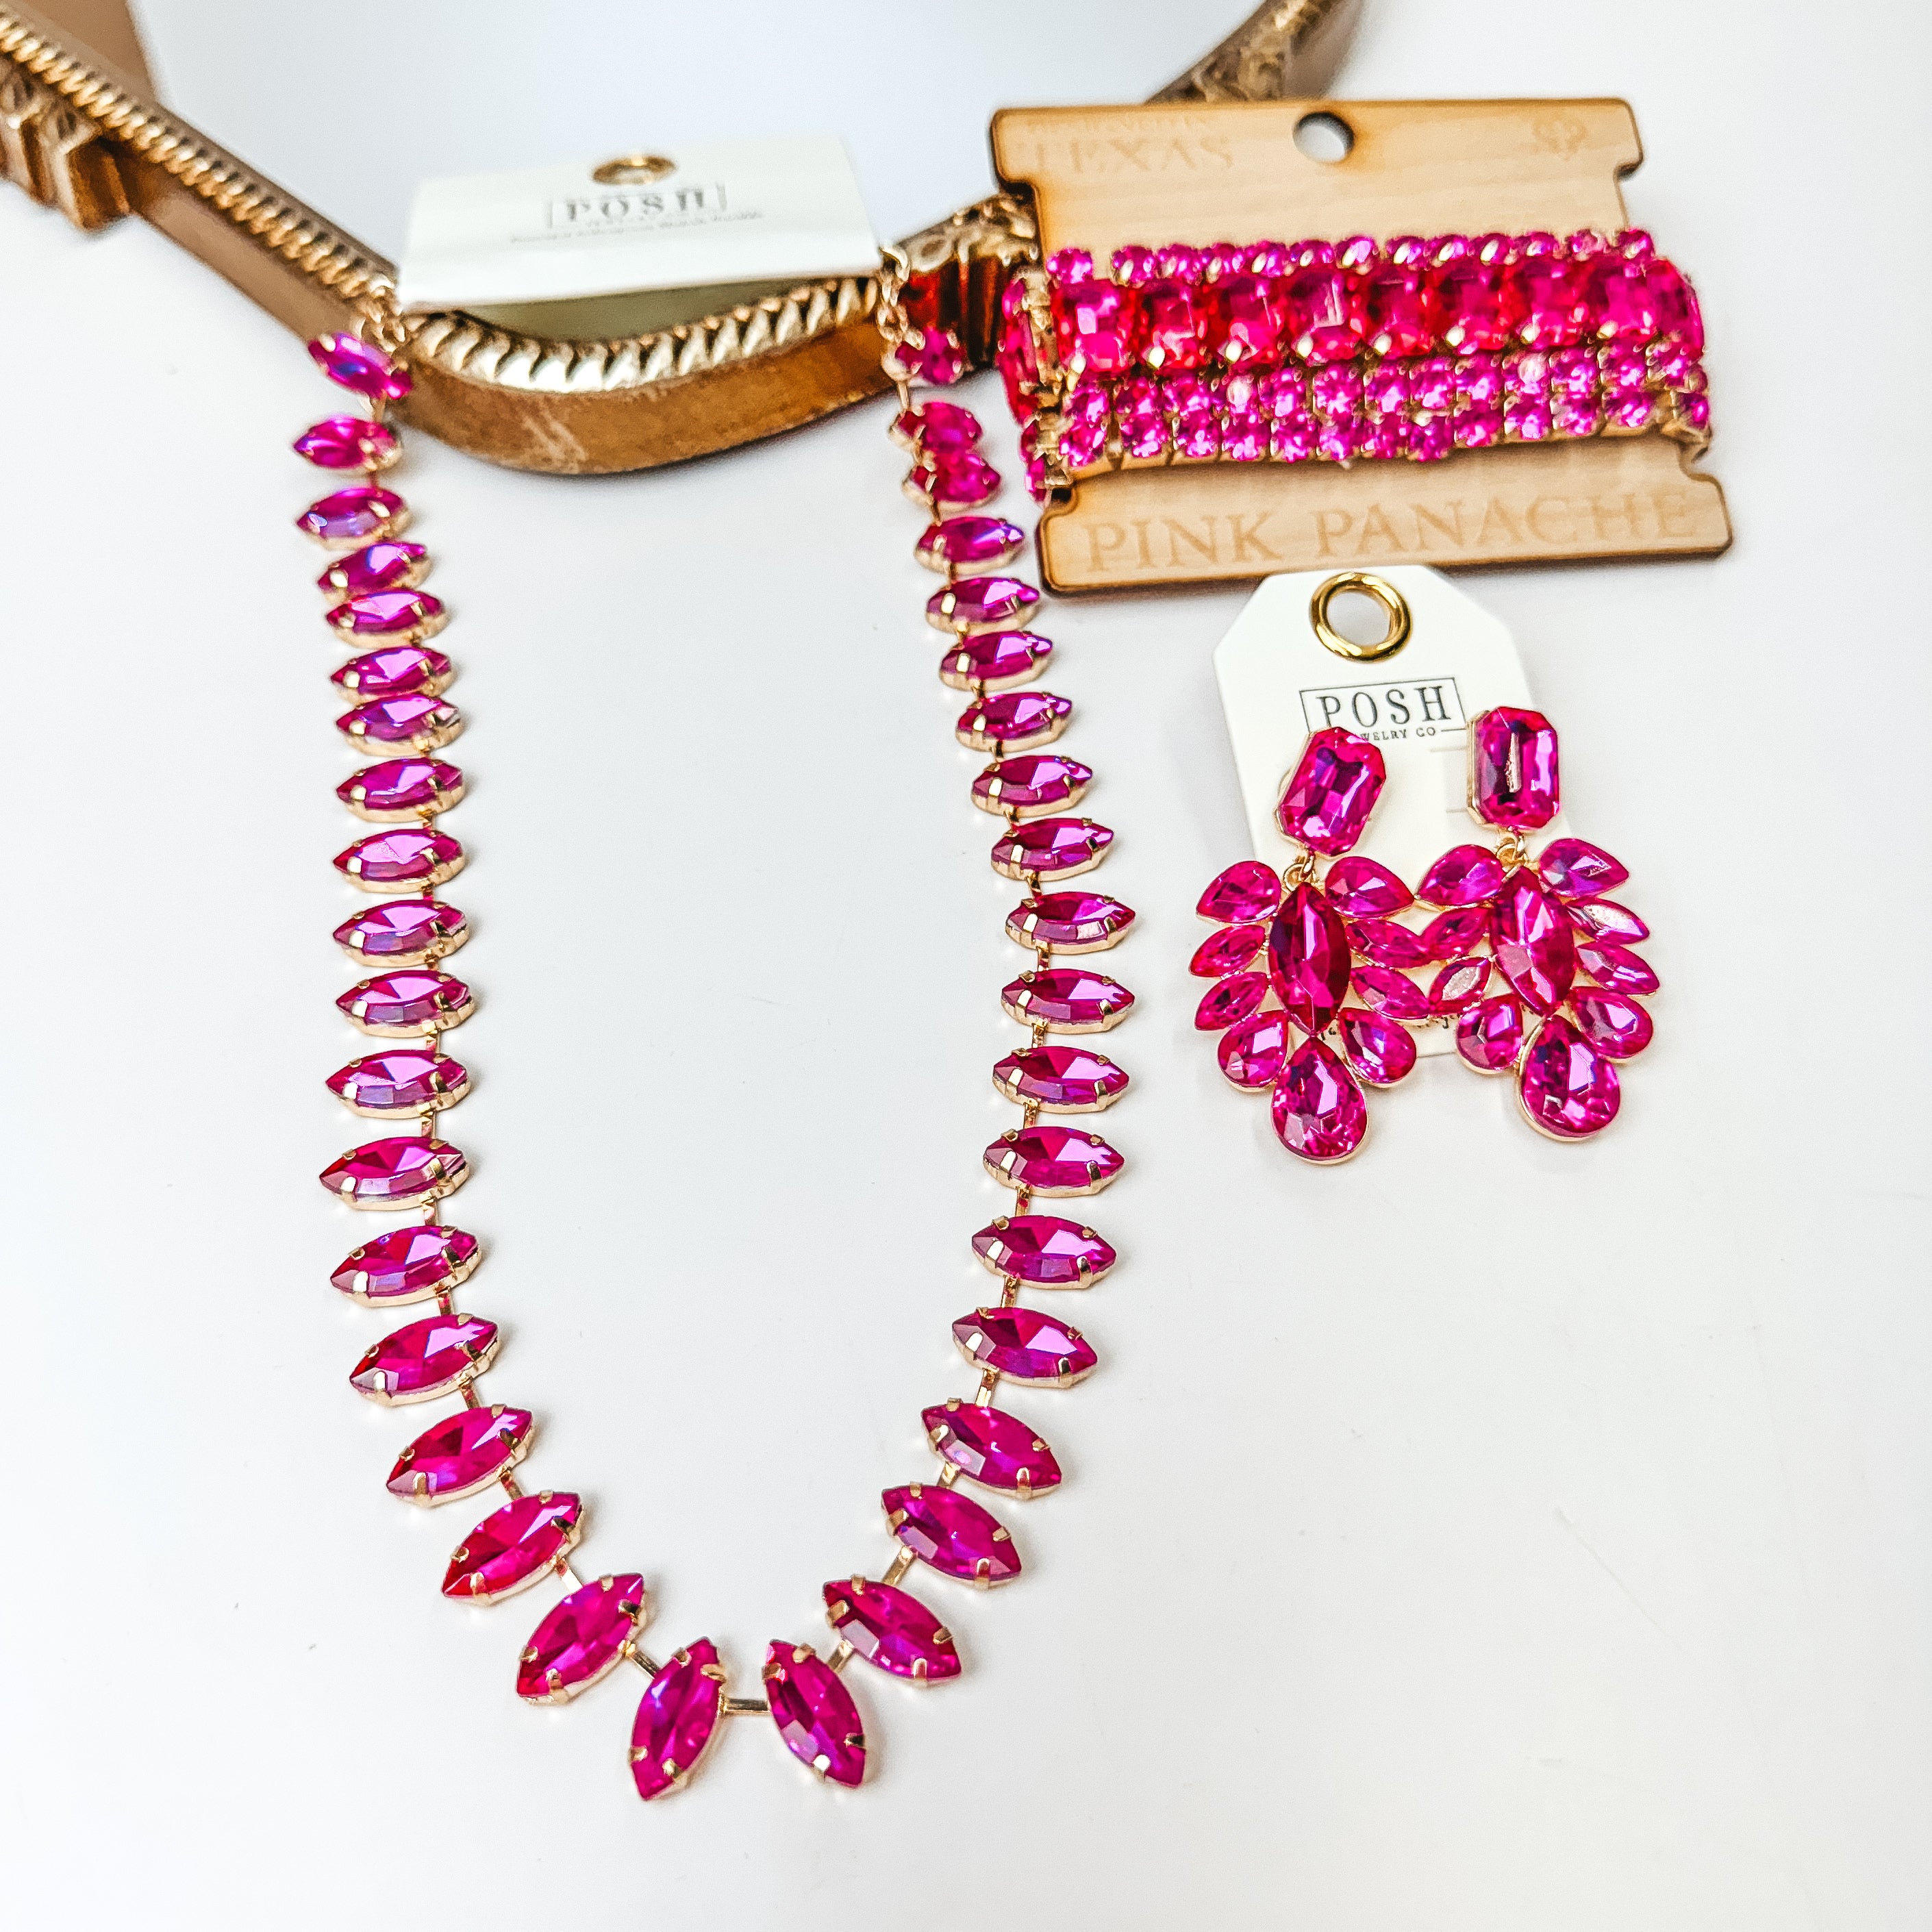 Pink Panache | Silver Tone Rhinestone Bracelet Set in Fuchsia Pink - Giddy Up Glamour Boutique